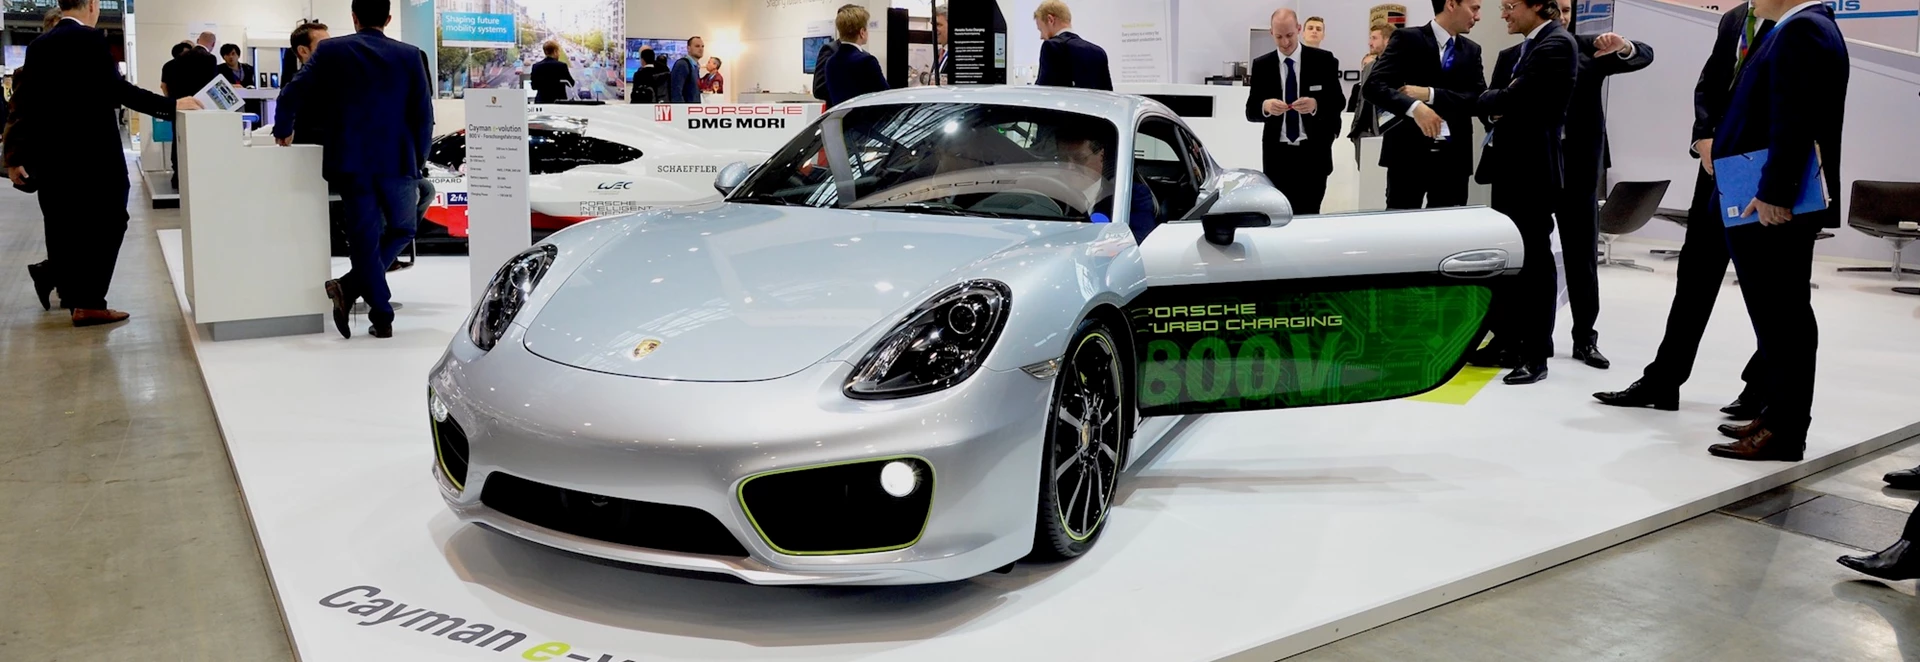 Porsche shows off Cayman e-volution at Electric Vehicle Symposium 